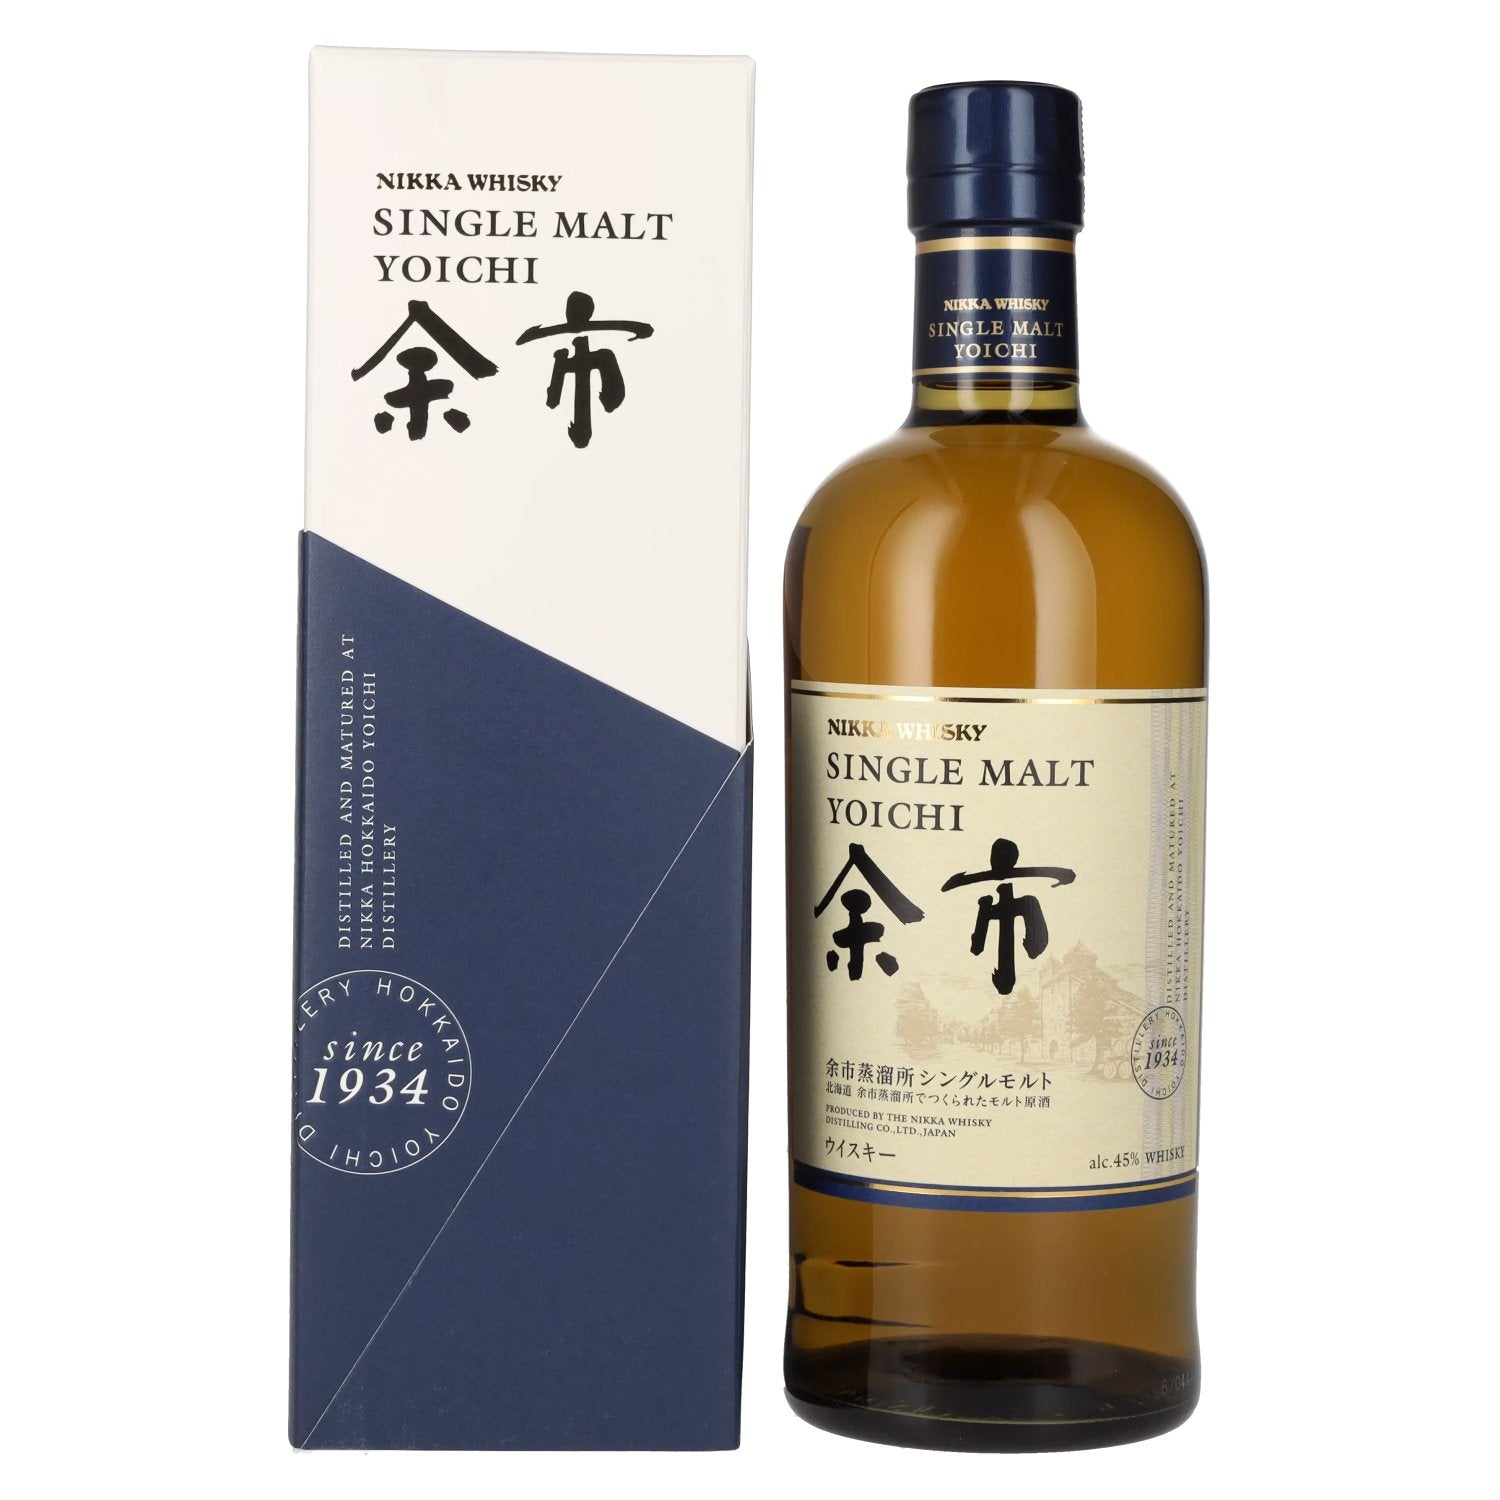 Nikka Yoichi Single Malt Whisky 45% Vol. 0,7l in Giftbox